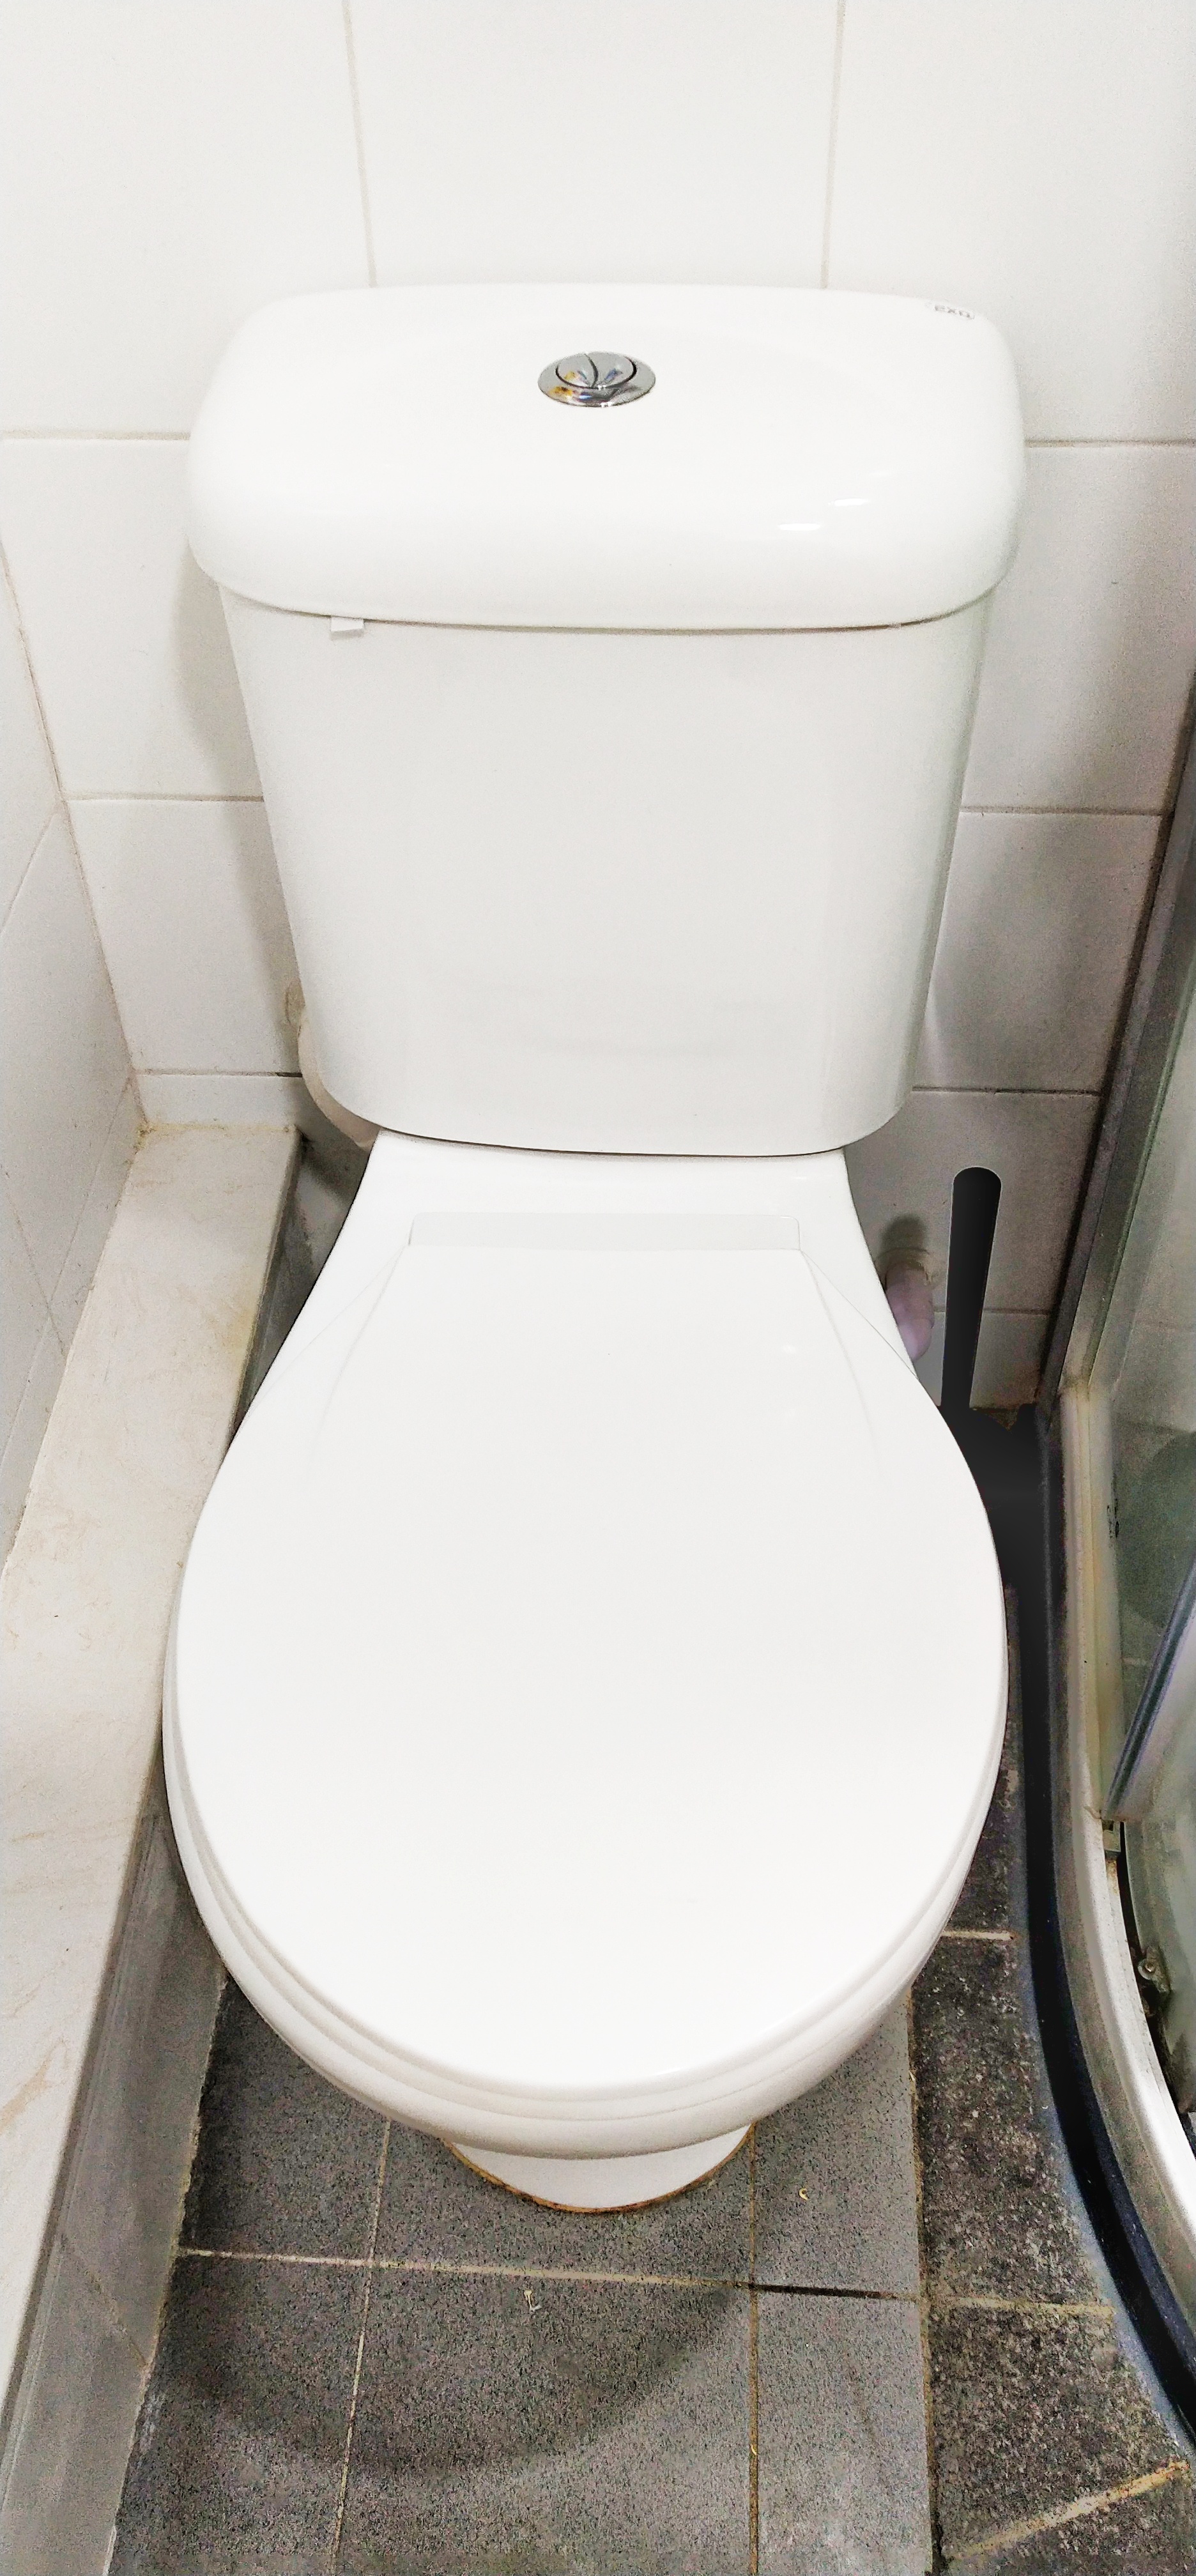 flushing toilet white color